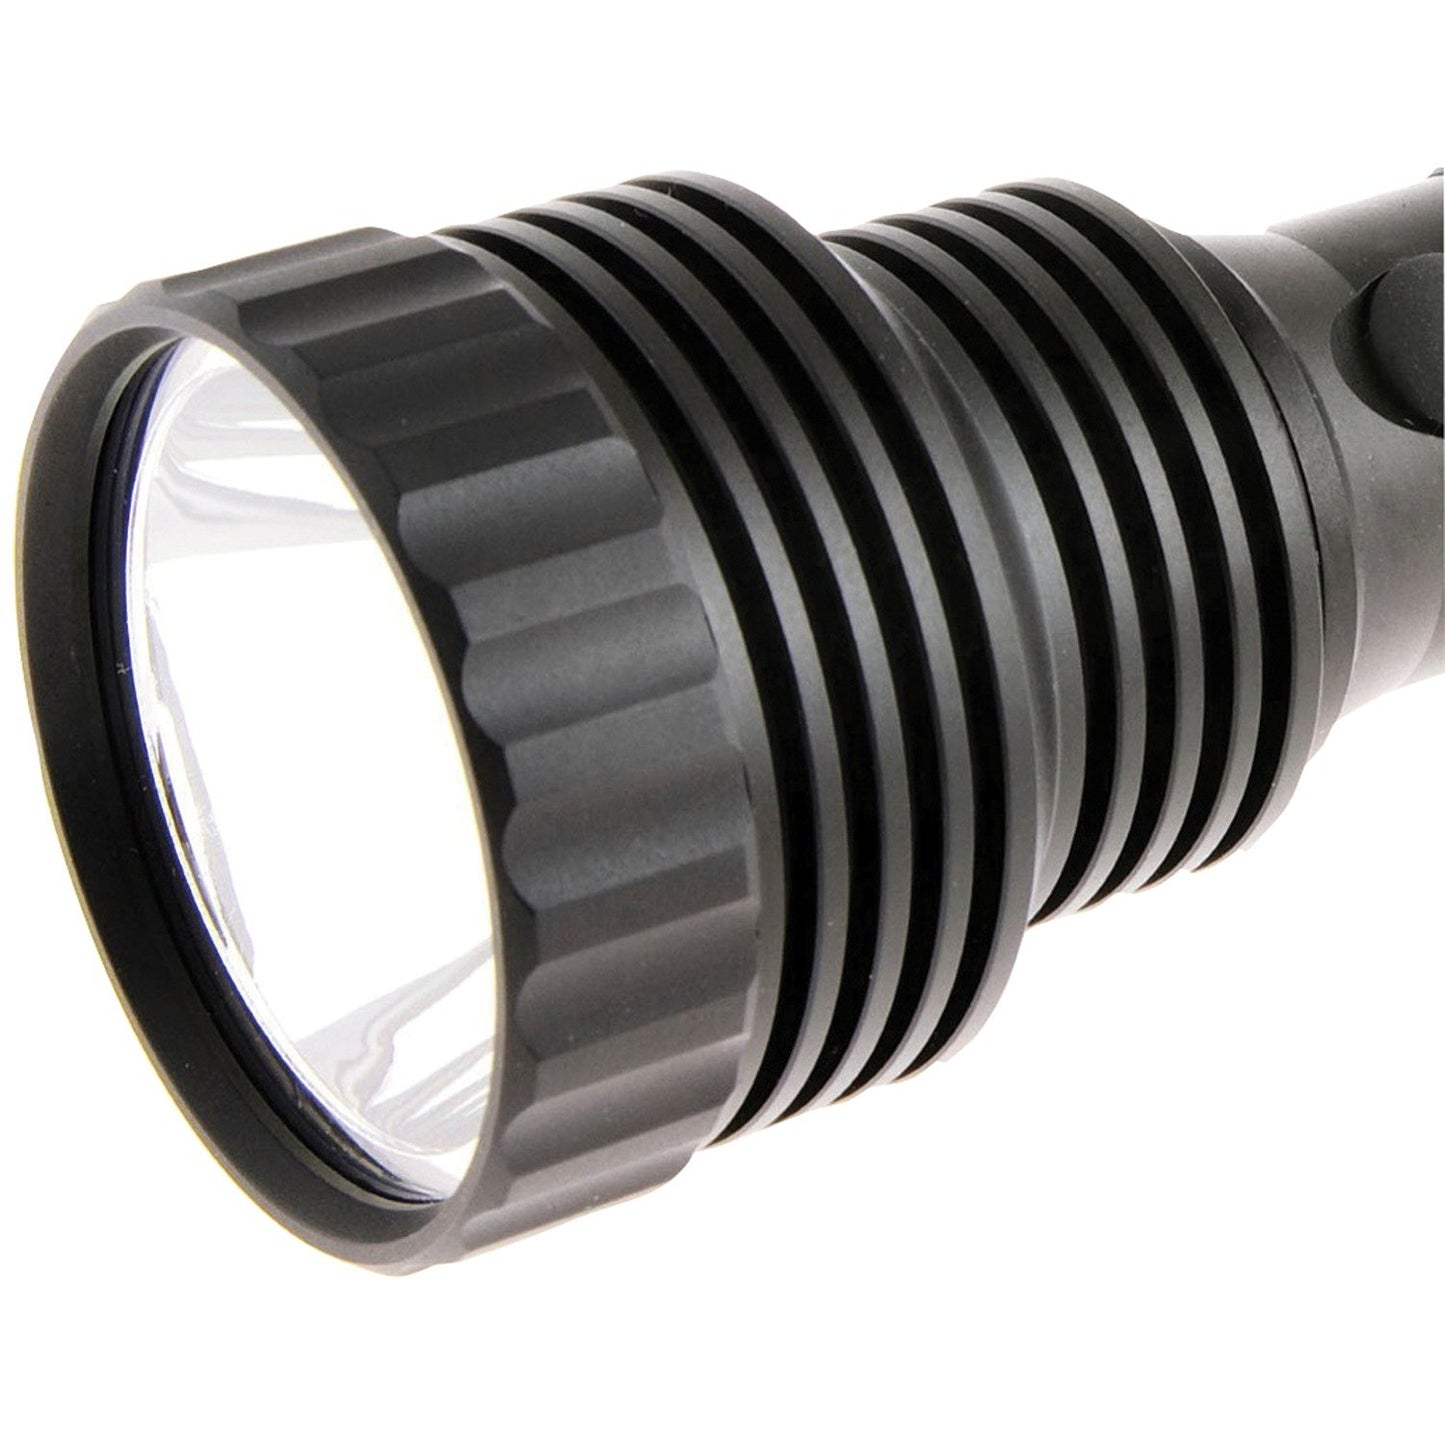 Dorcy 41-4299 800-Lumen Rechargeable LED Flashlight